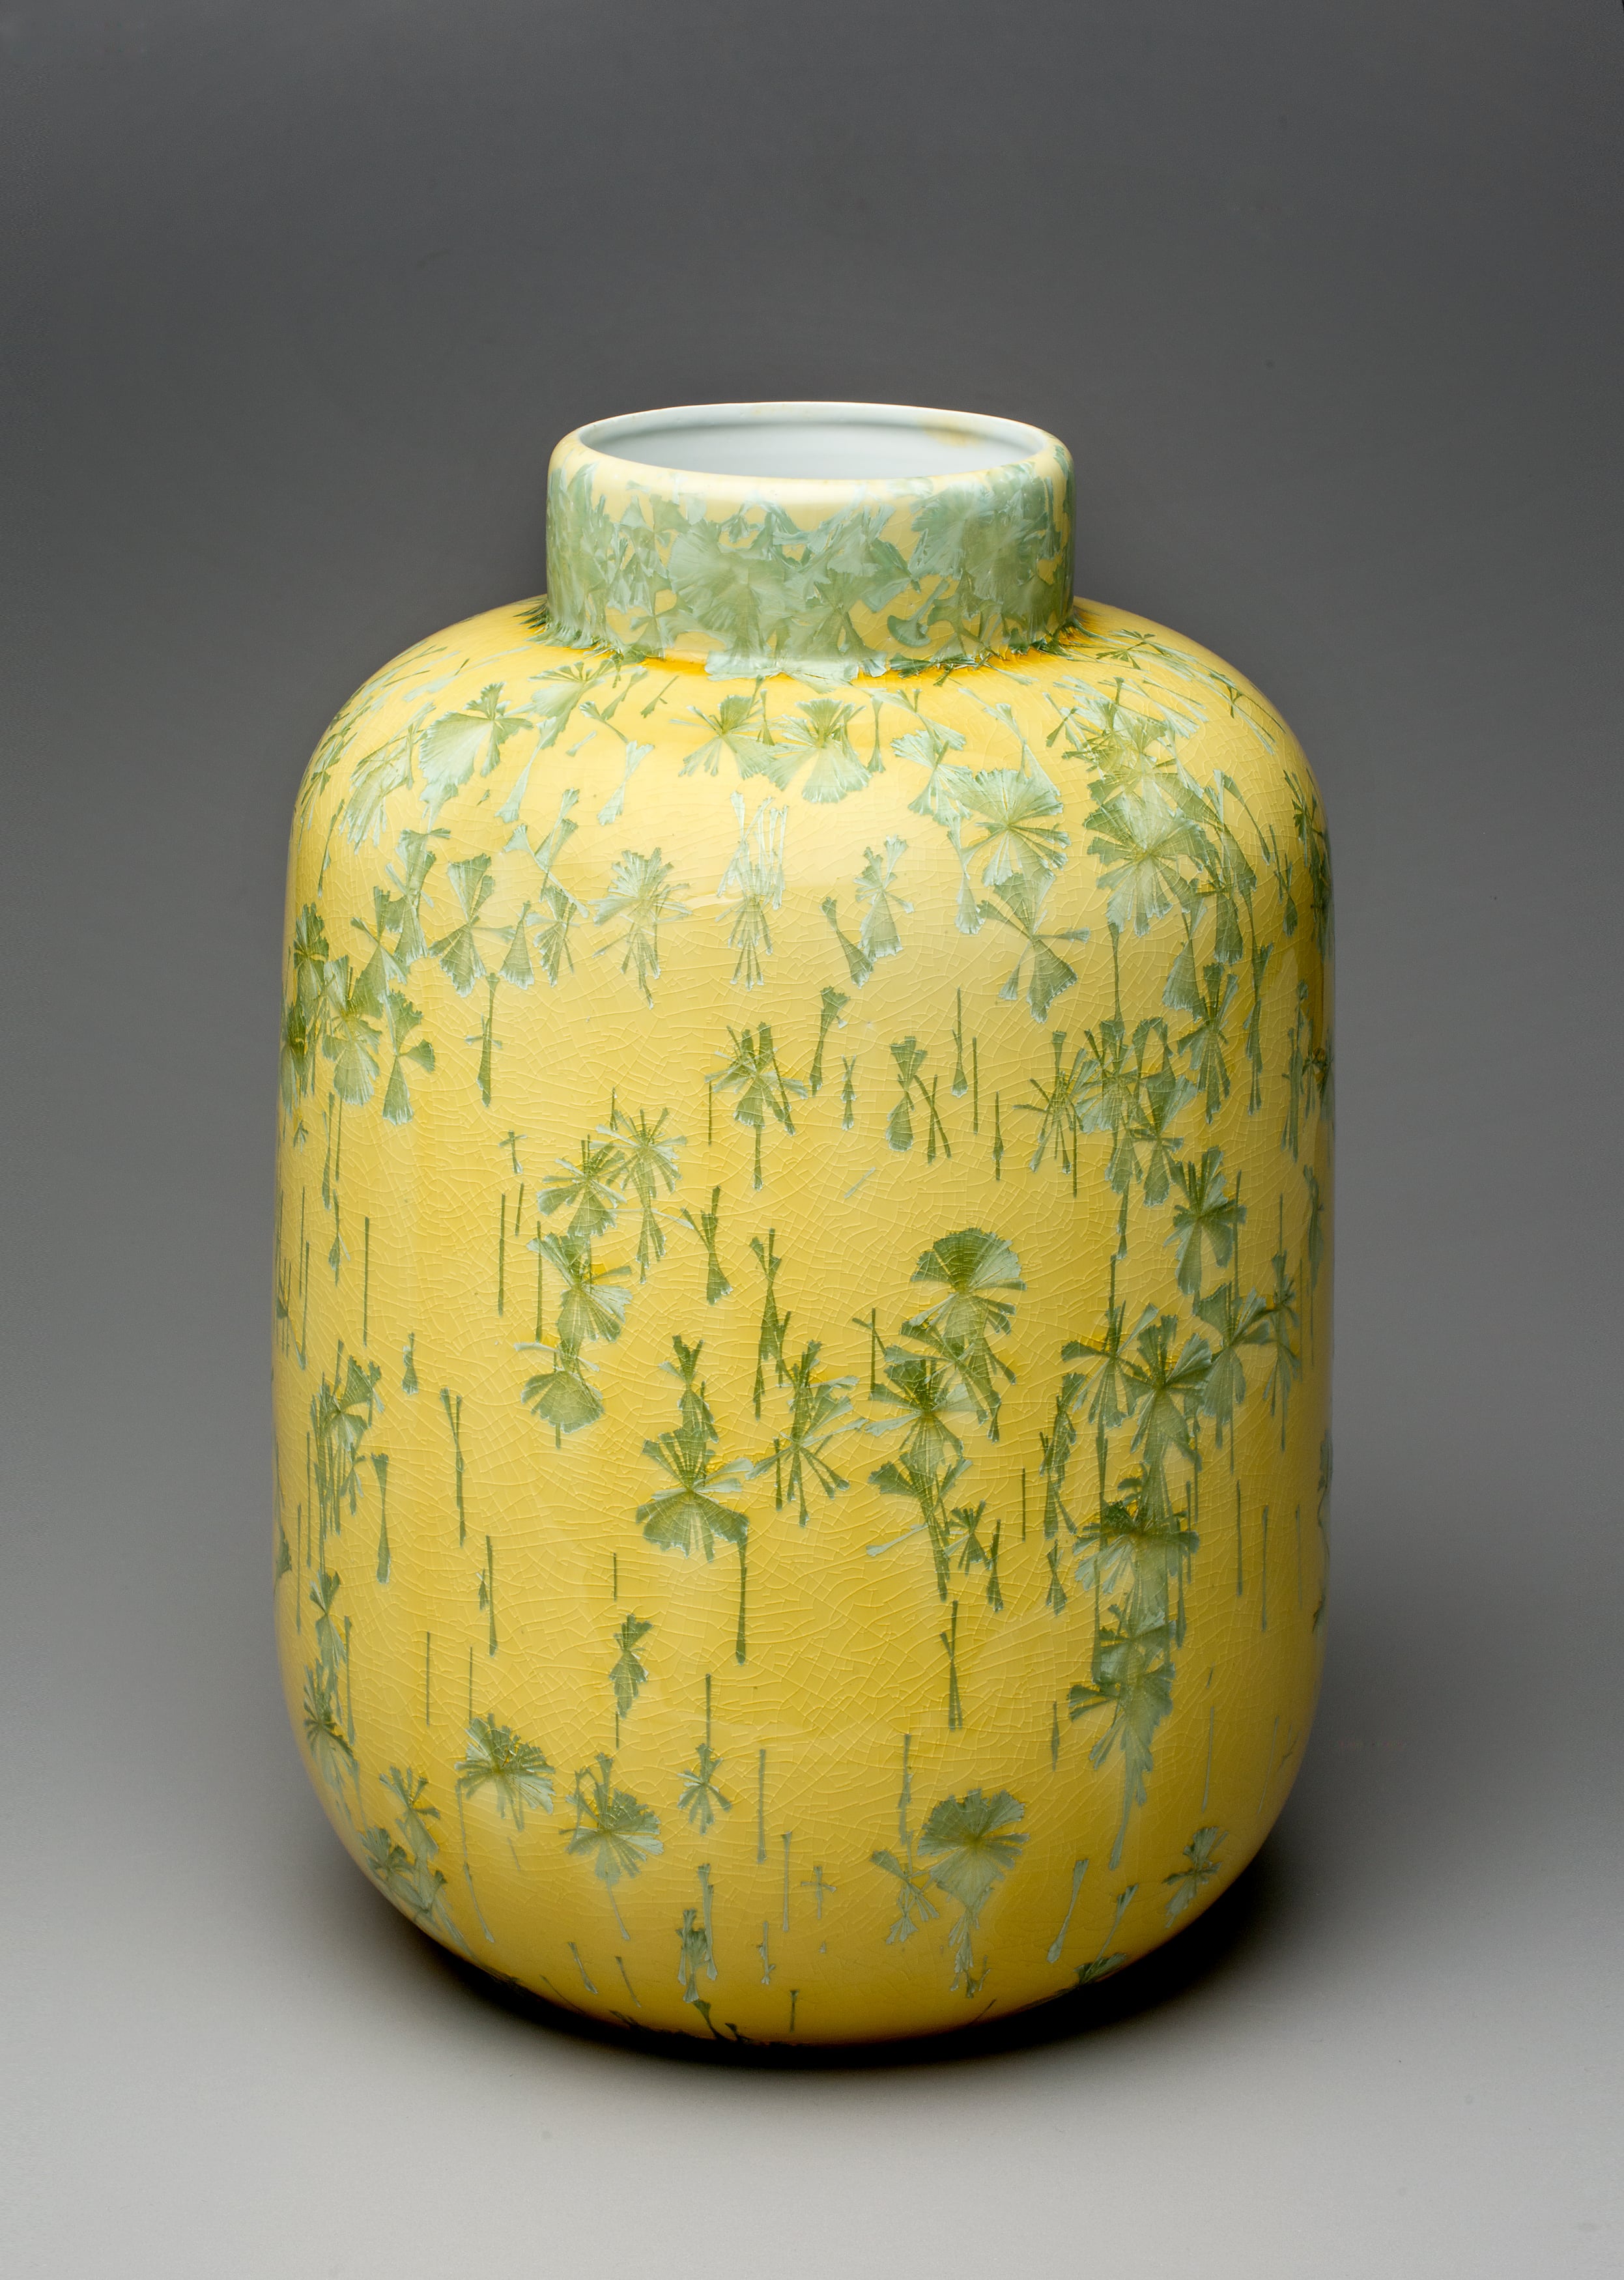 Crystalline Vases - Milan Pekař